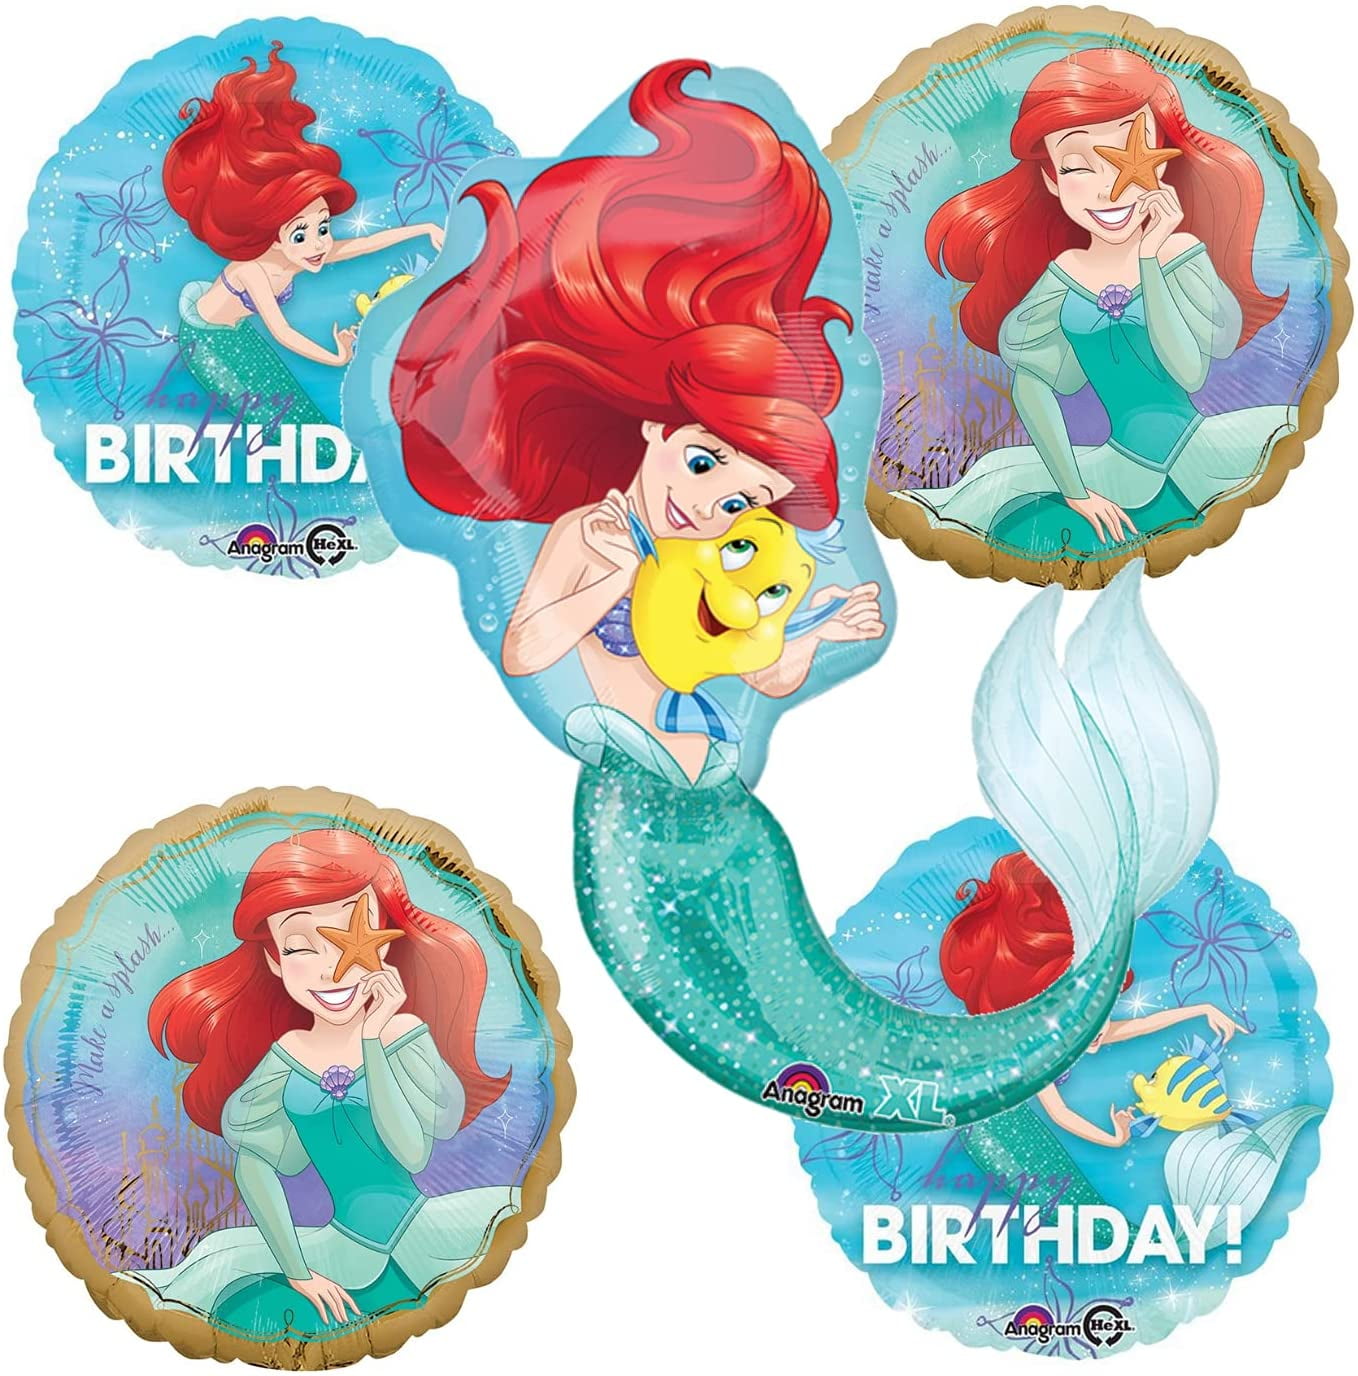 Mermaid Ariel Birthday Party Balloons - Set Of 5 Little Merrmaid Theme Balloon Decorations For A Kids Happy Birthday Celebration - Walmart.com